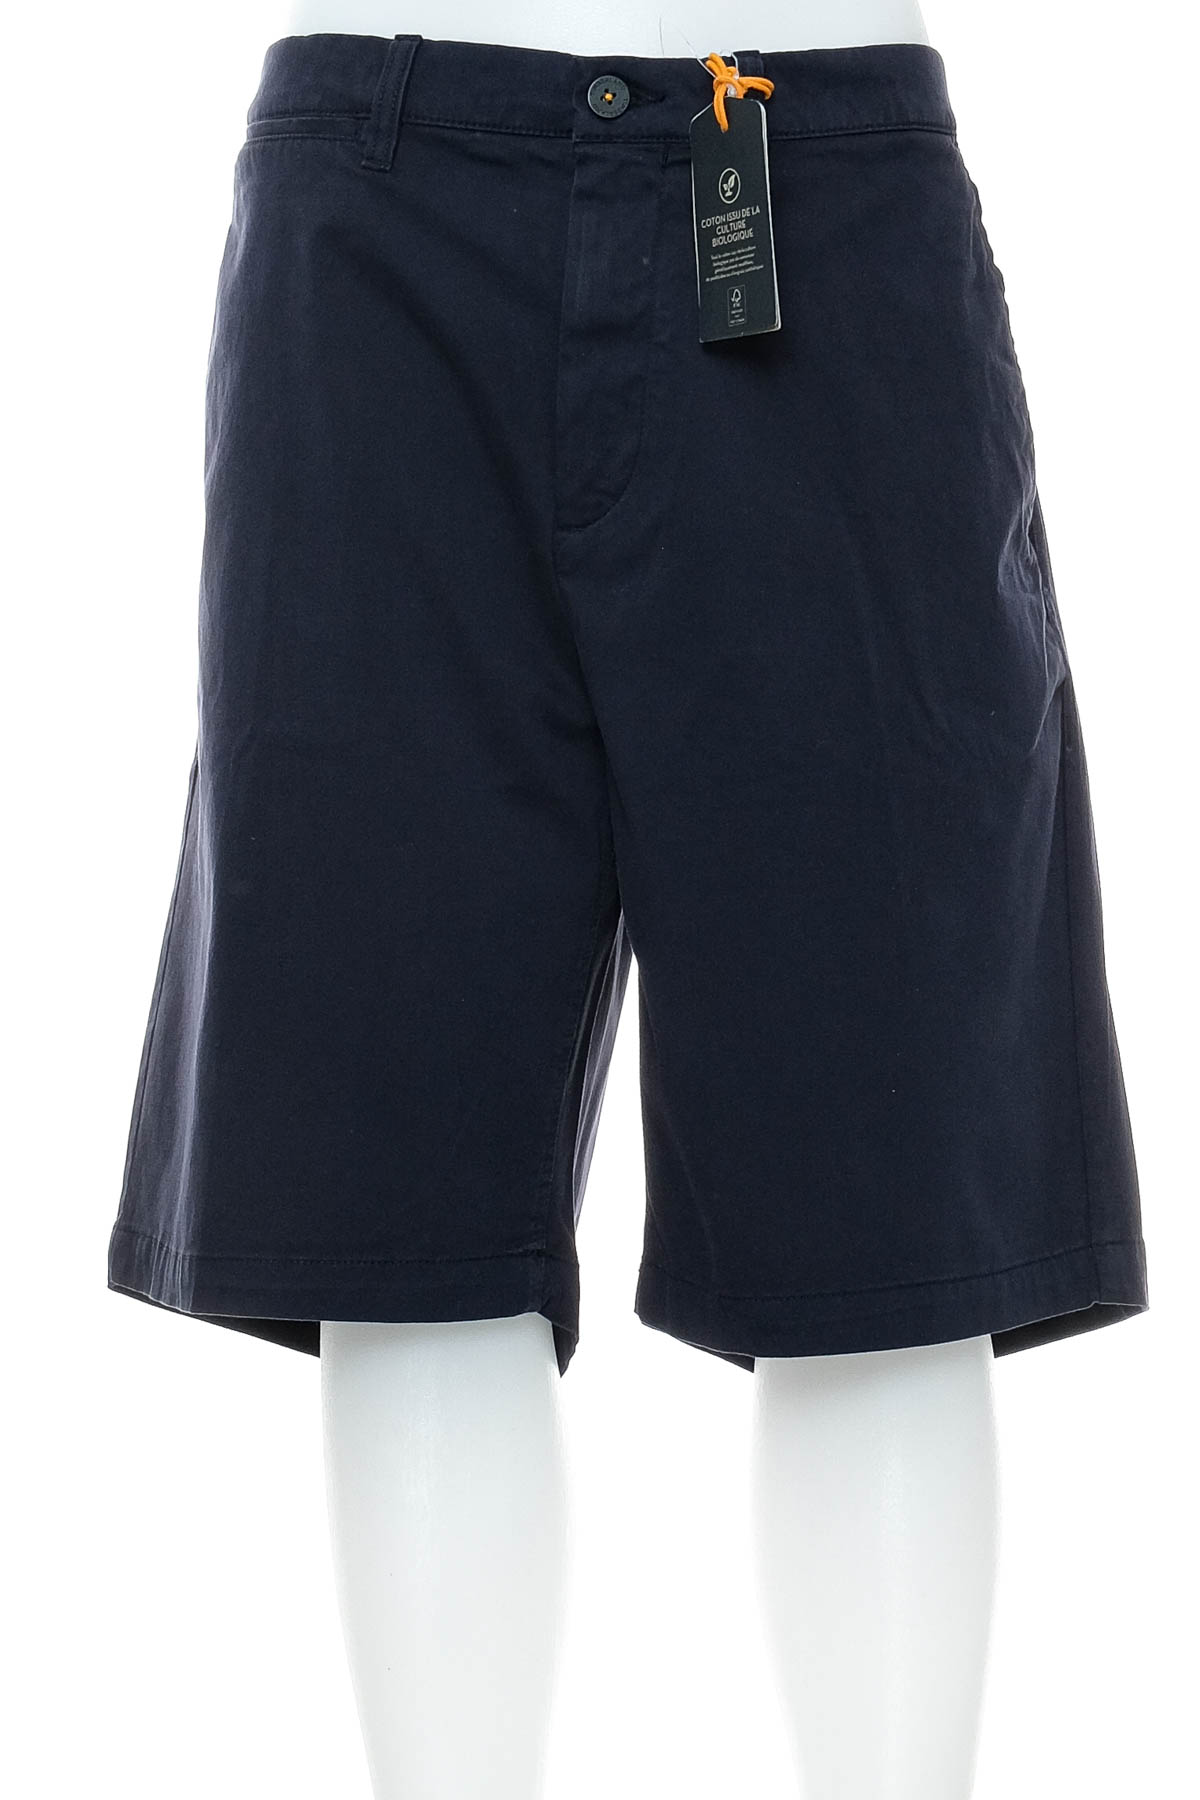 Men's shorts - Timberland - 0